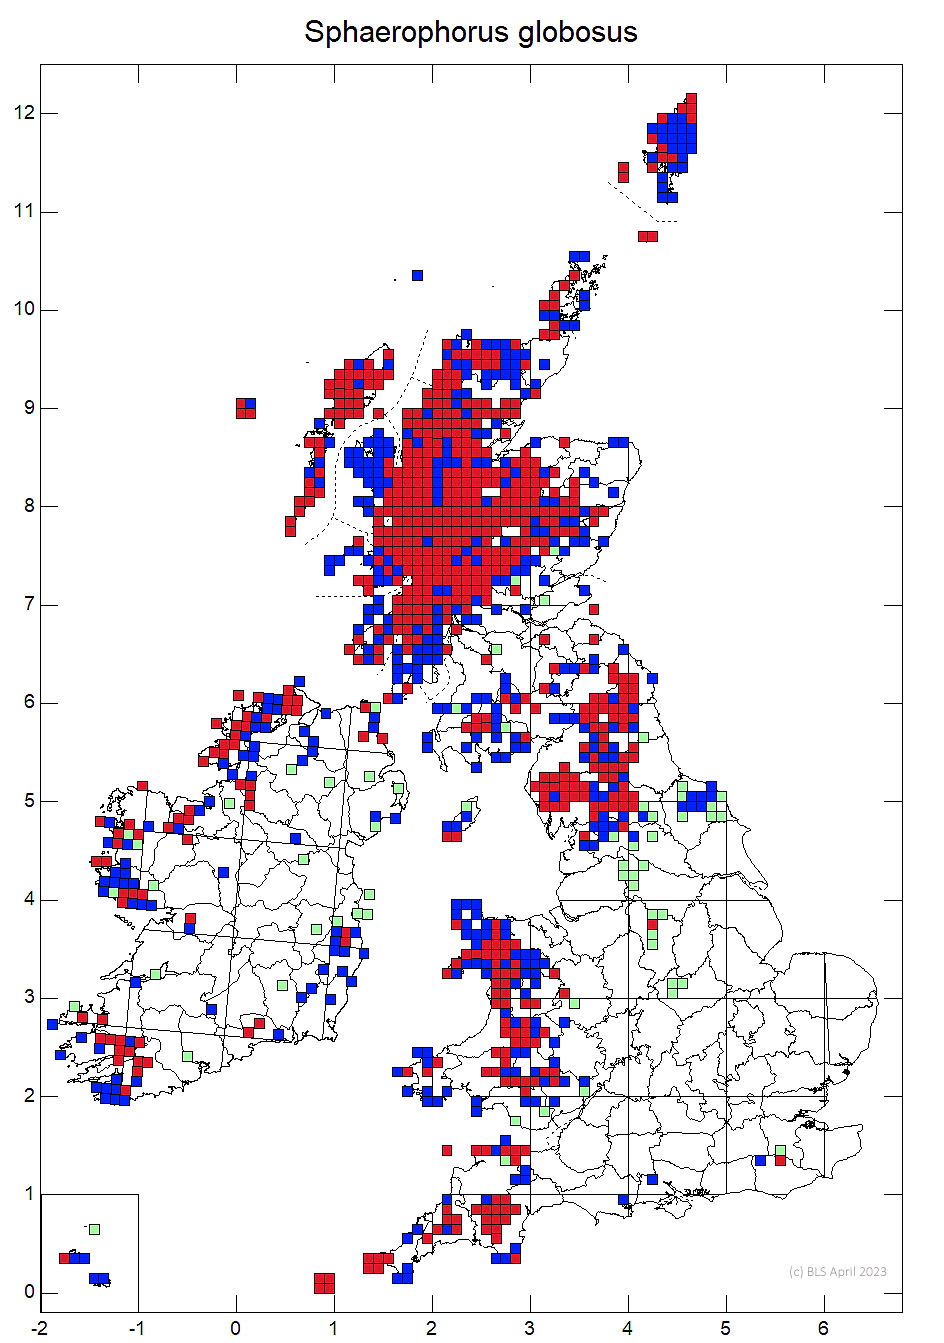 Sphaerophorus globosus 10km sq distribution map